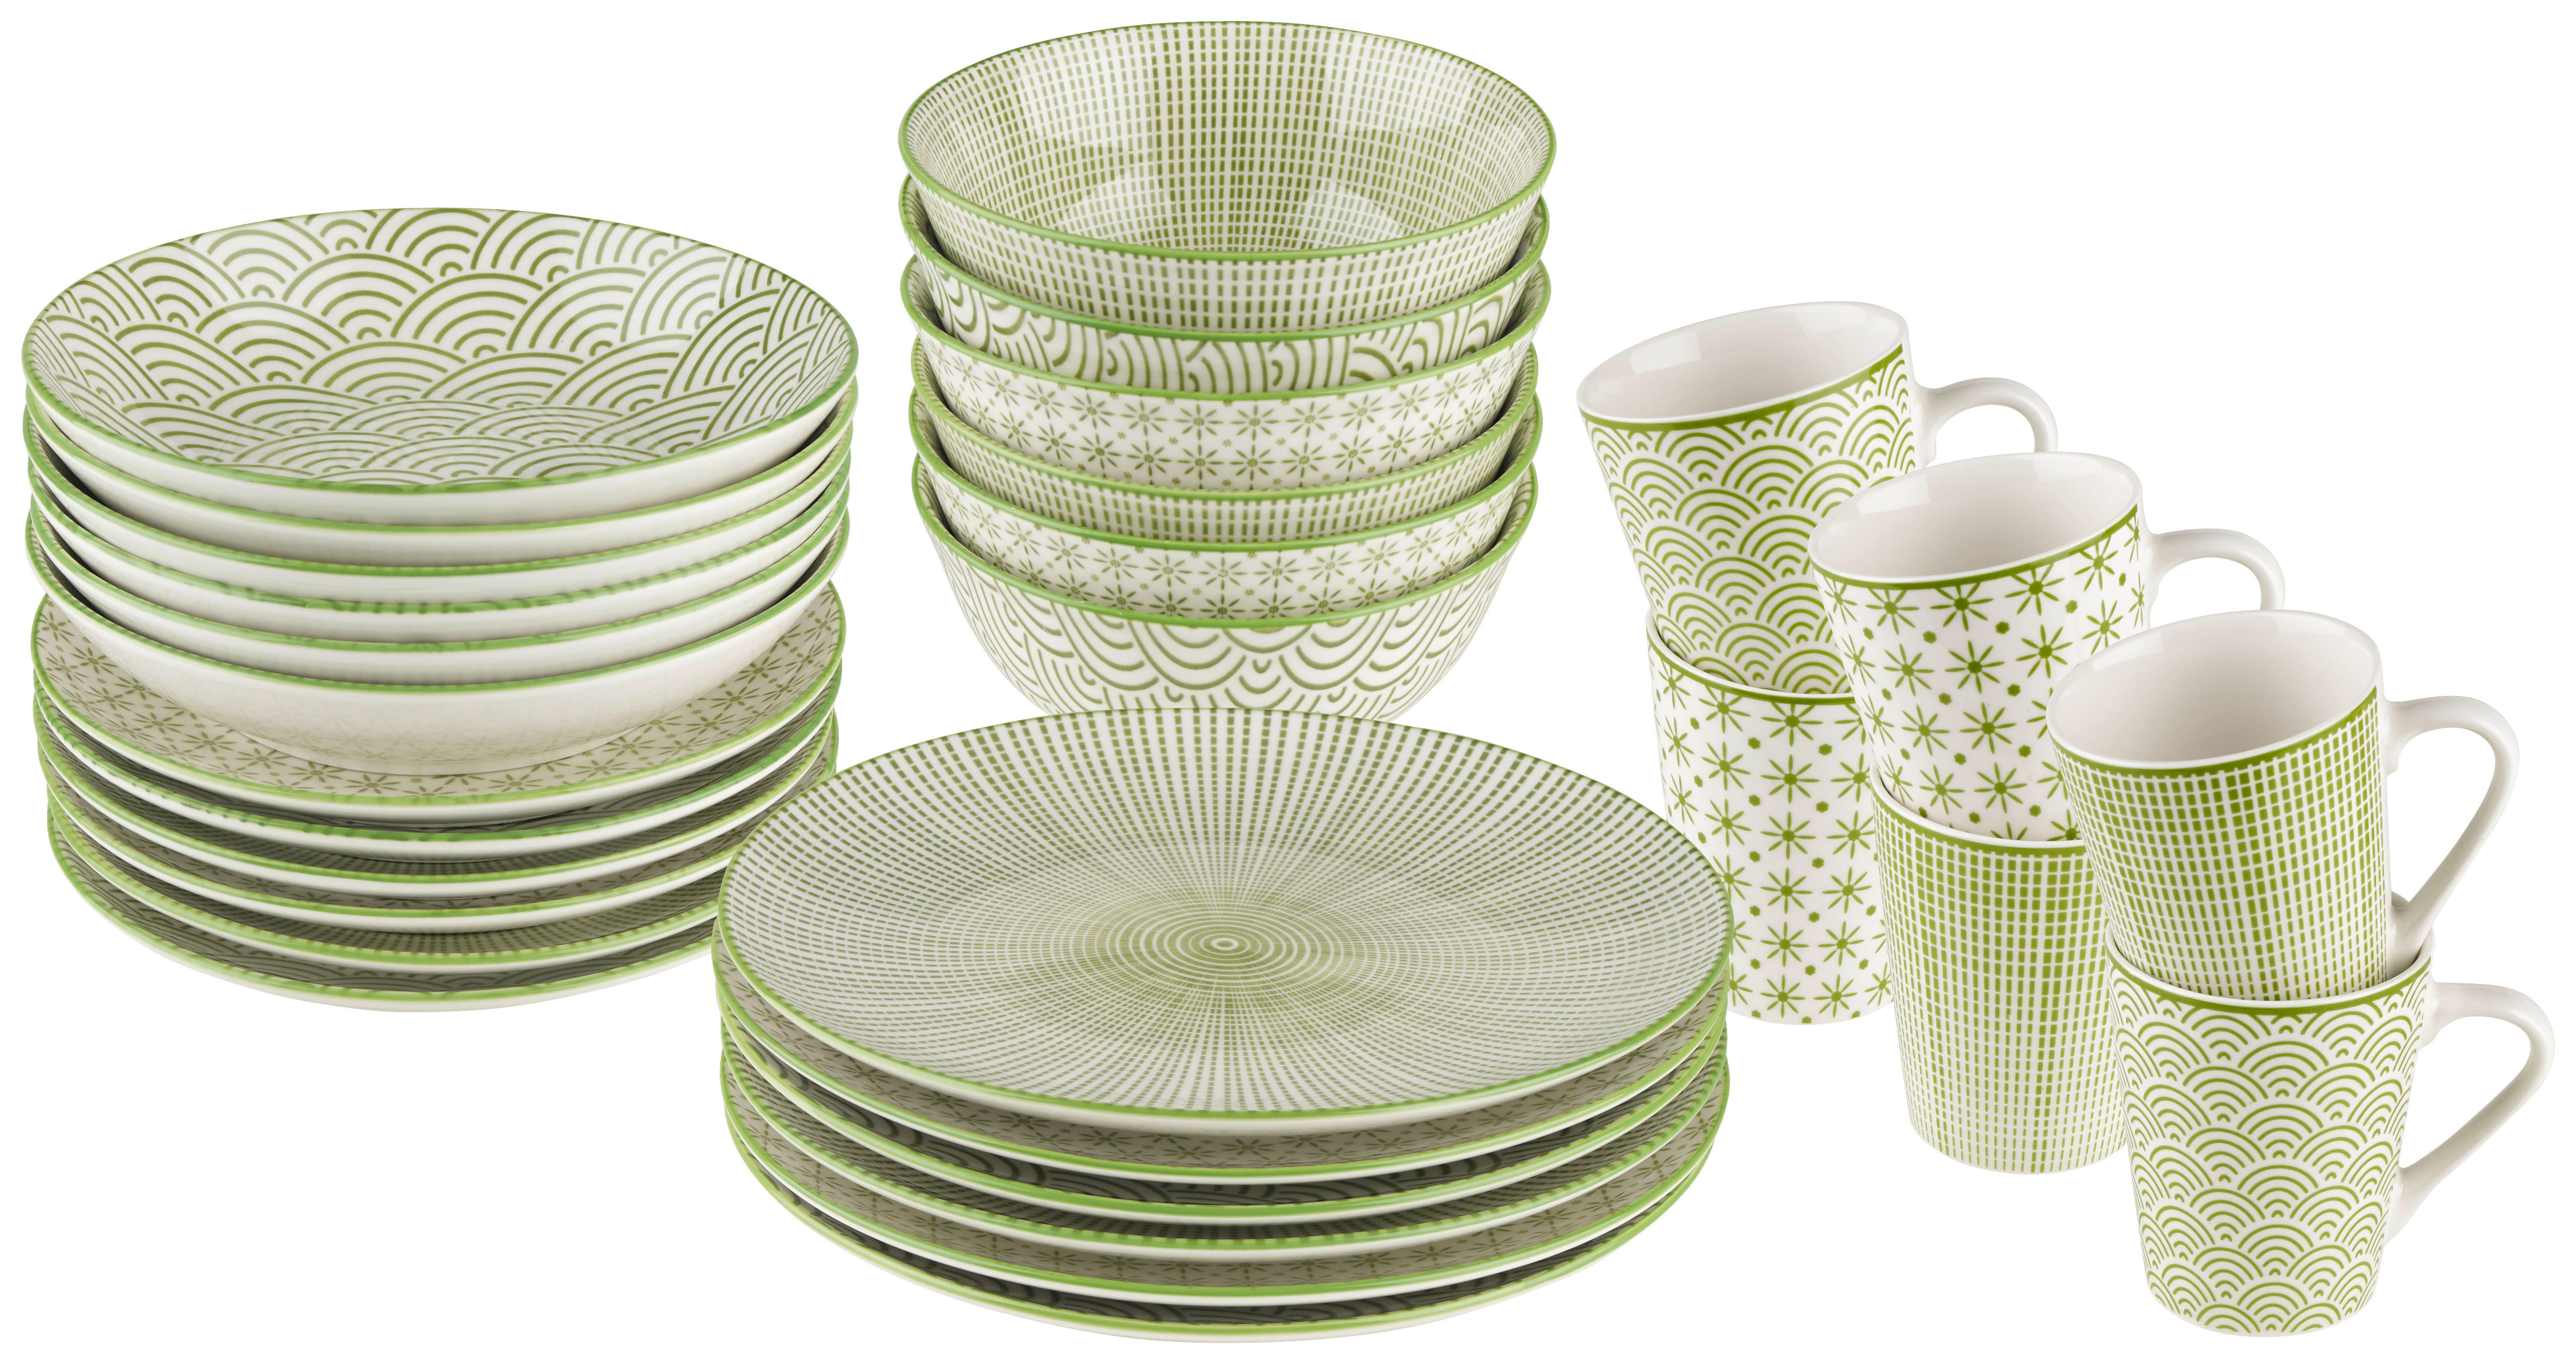 KOMPLETT SERVIS   30 delar  Verde  - vit/grön, Trend, keramik - Best Price